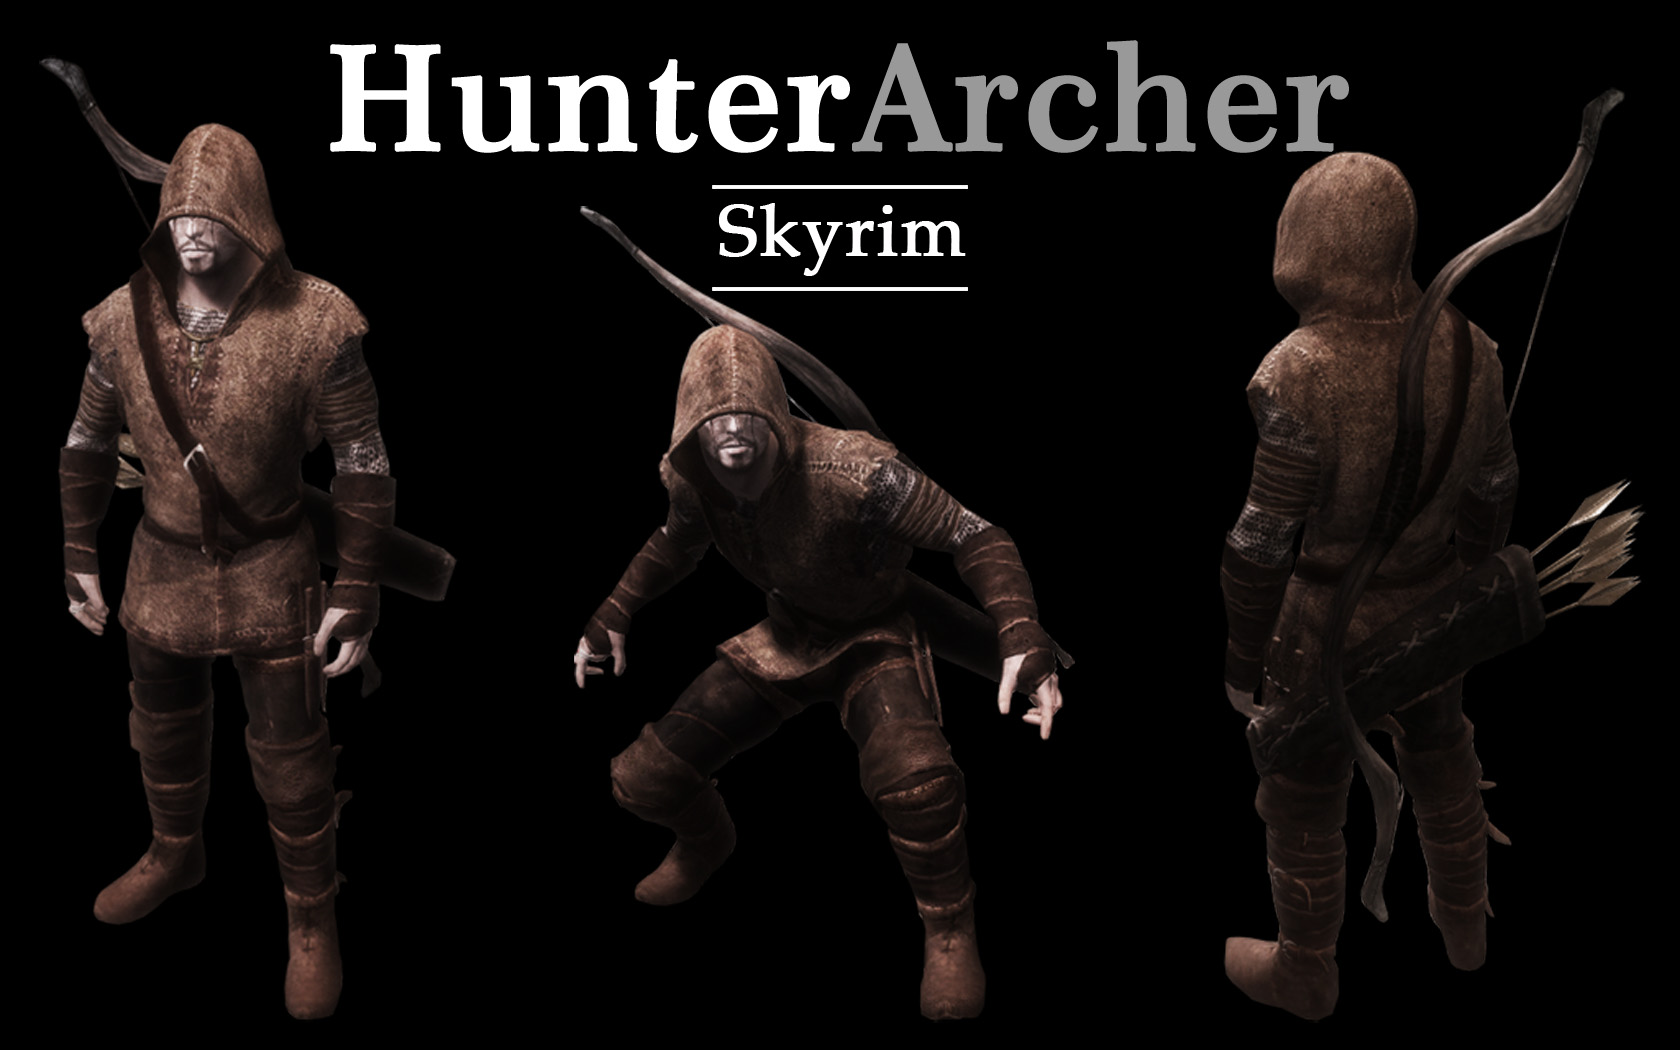 knightranger archer armor at skyrim special edition nexus mods and.